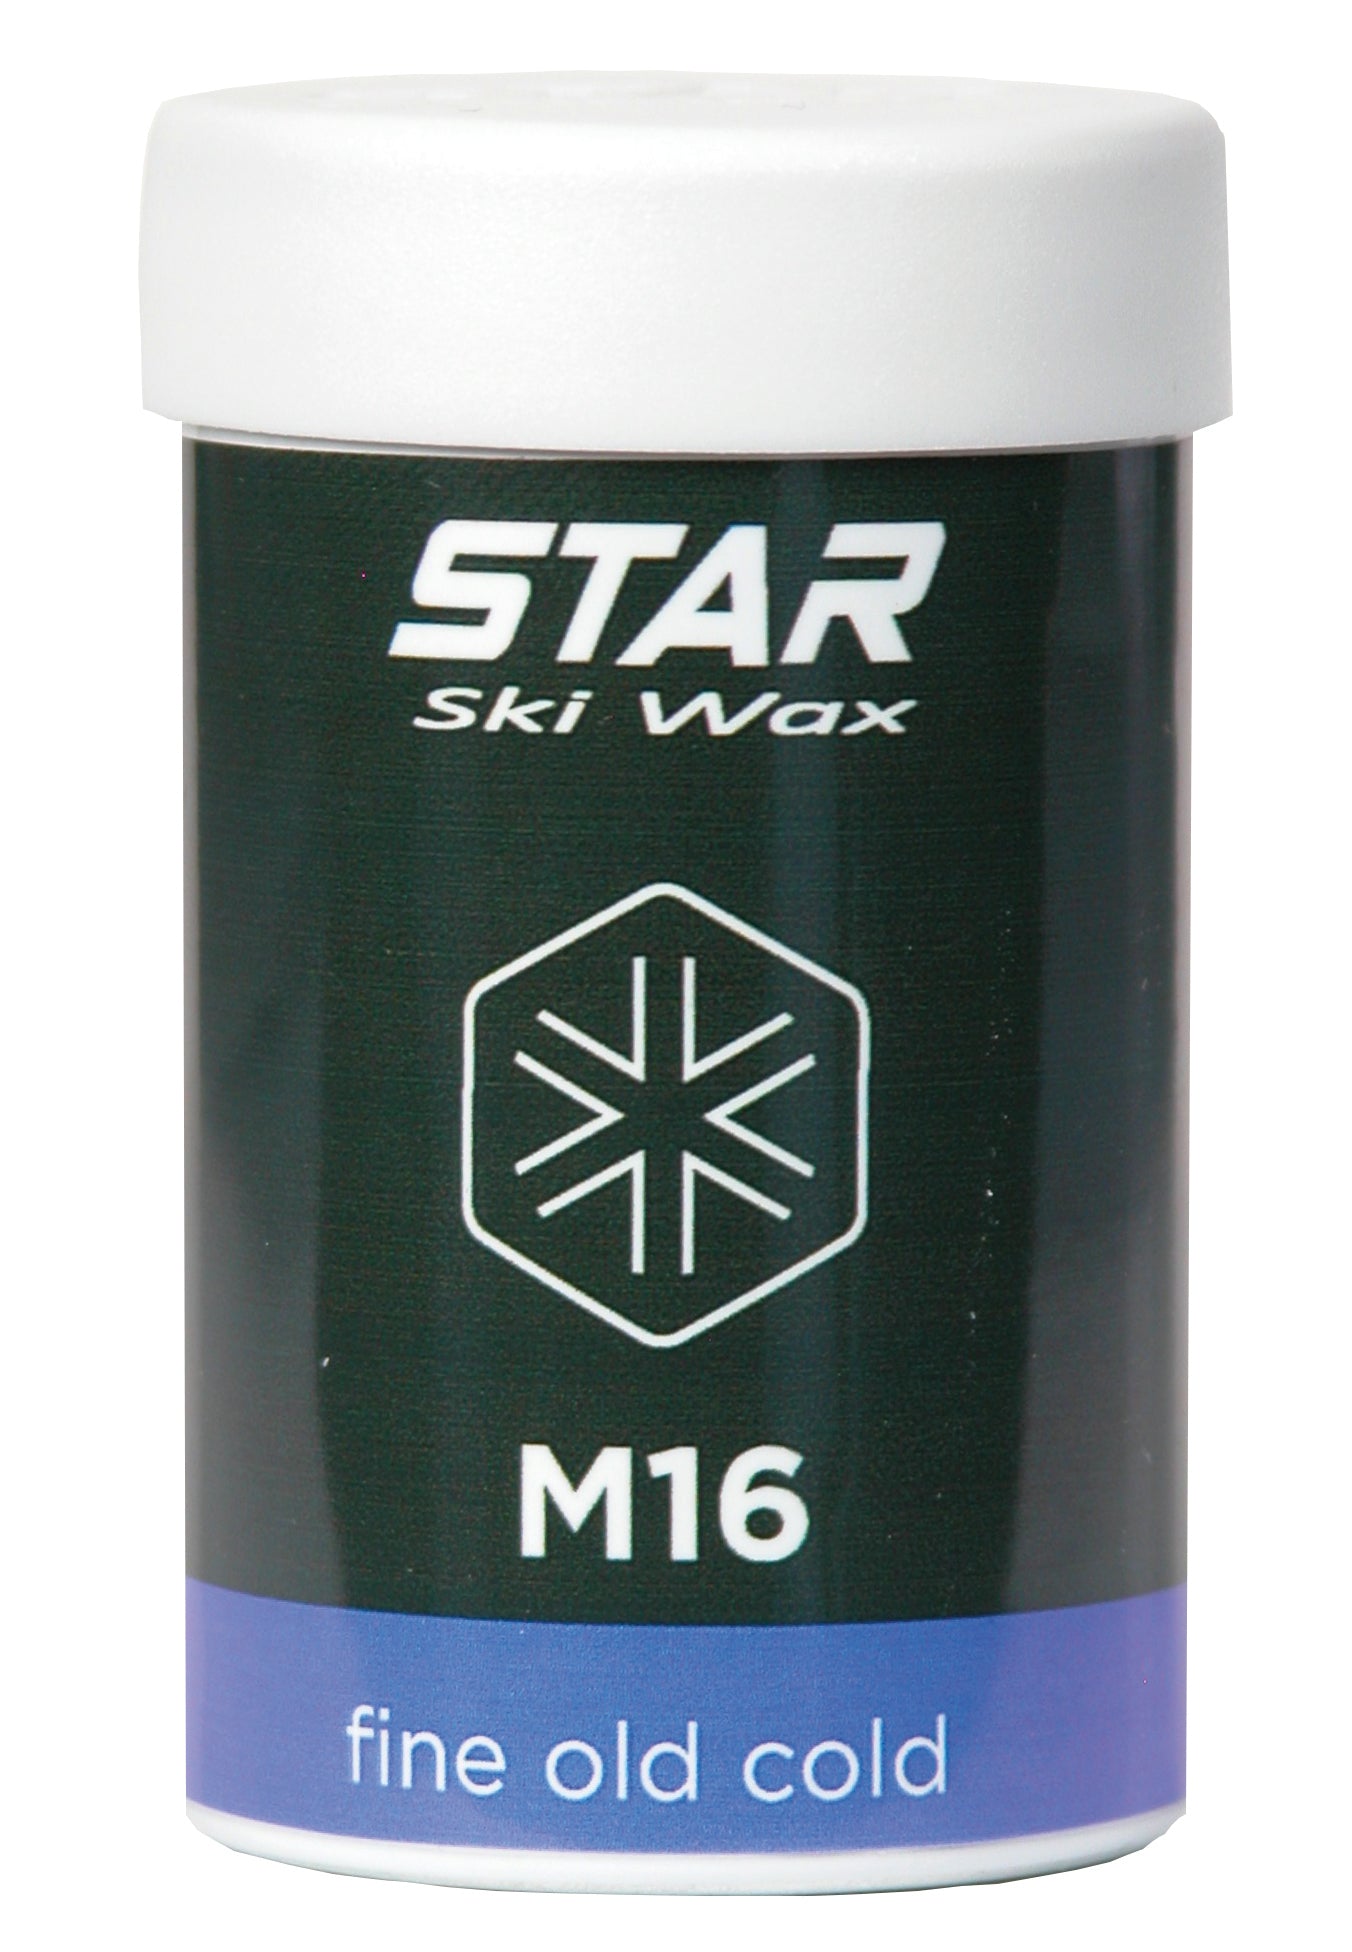 Star Beta M16